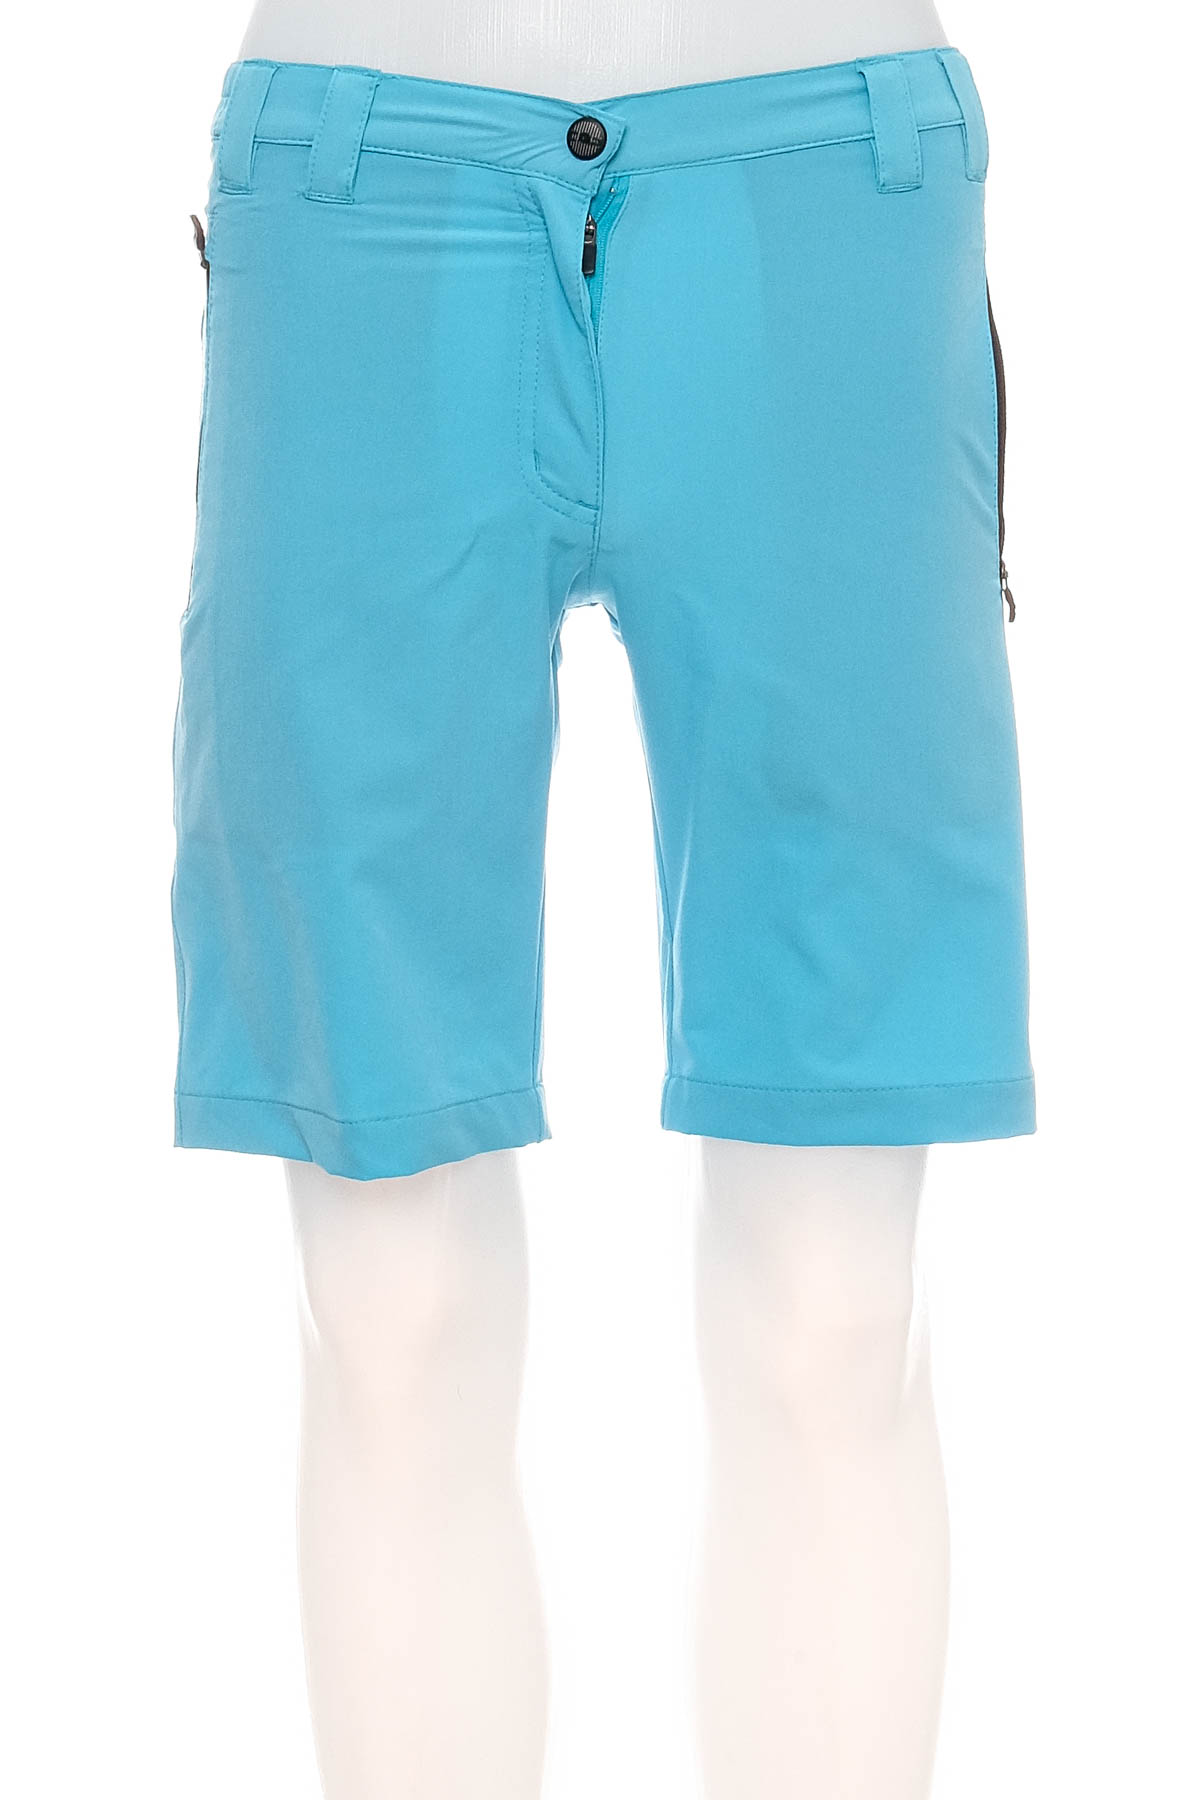 Shorts for boysта - CMP - 0